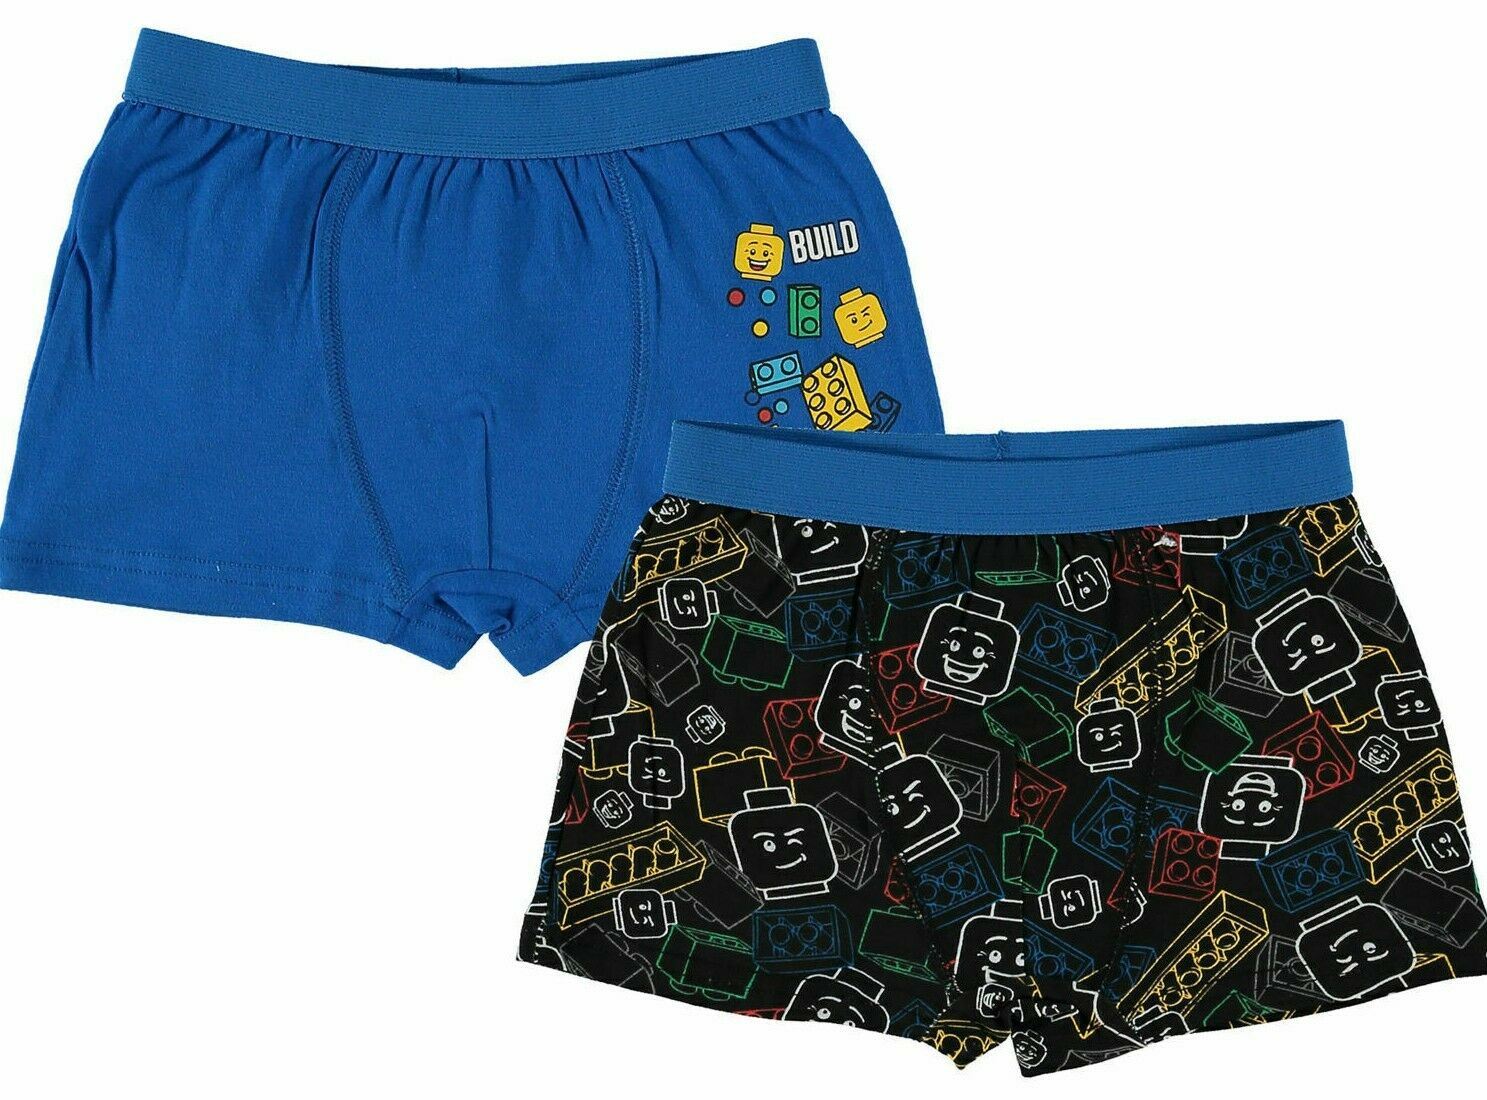 LEGO Boys' 2-pk Boxer Shorts, Underwear, Blue/Black Printed, size 4 Years